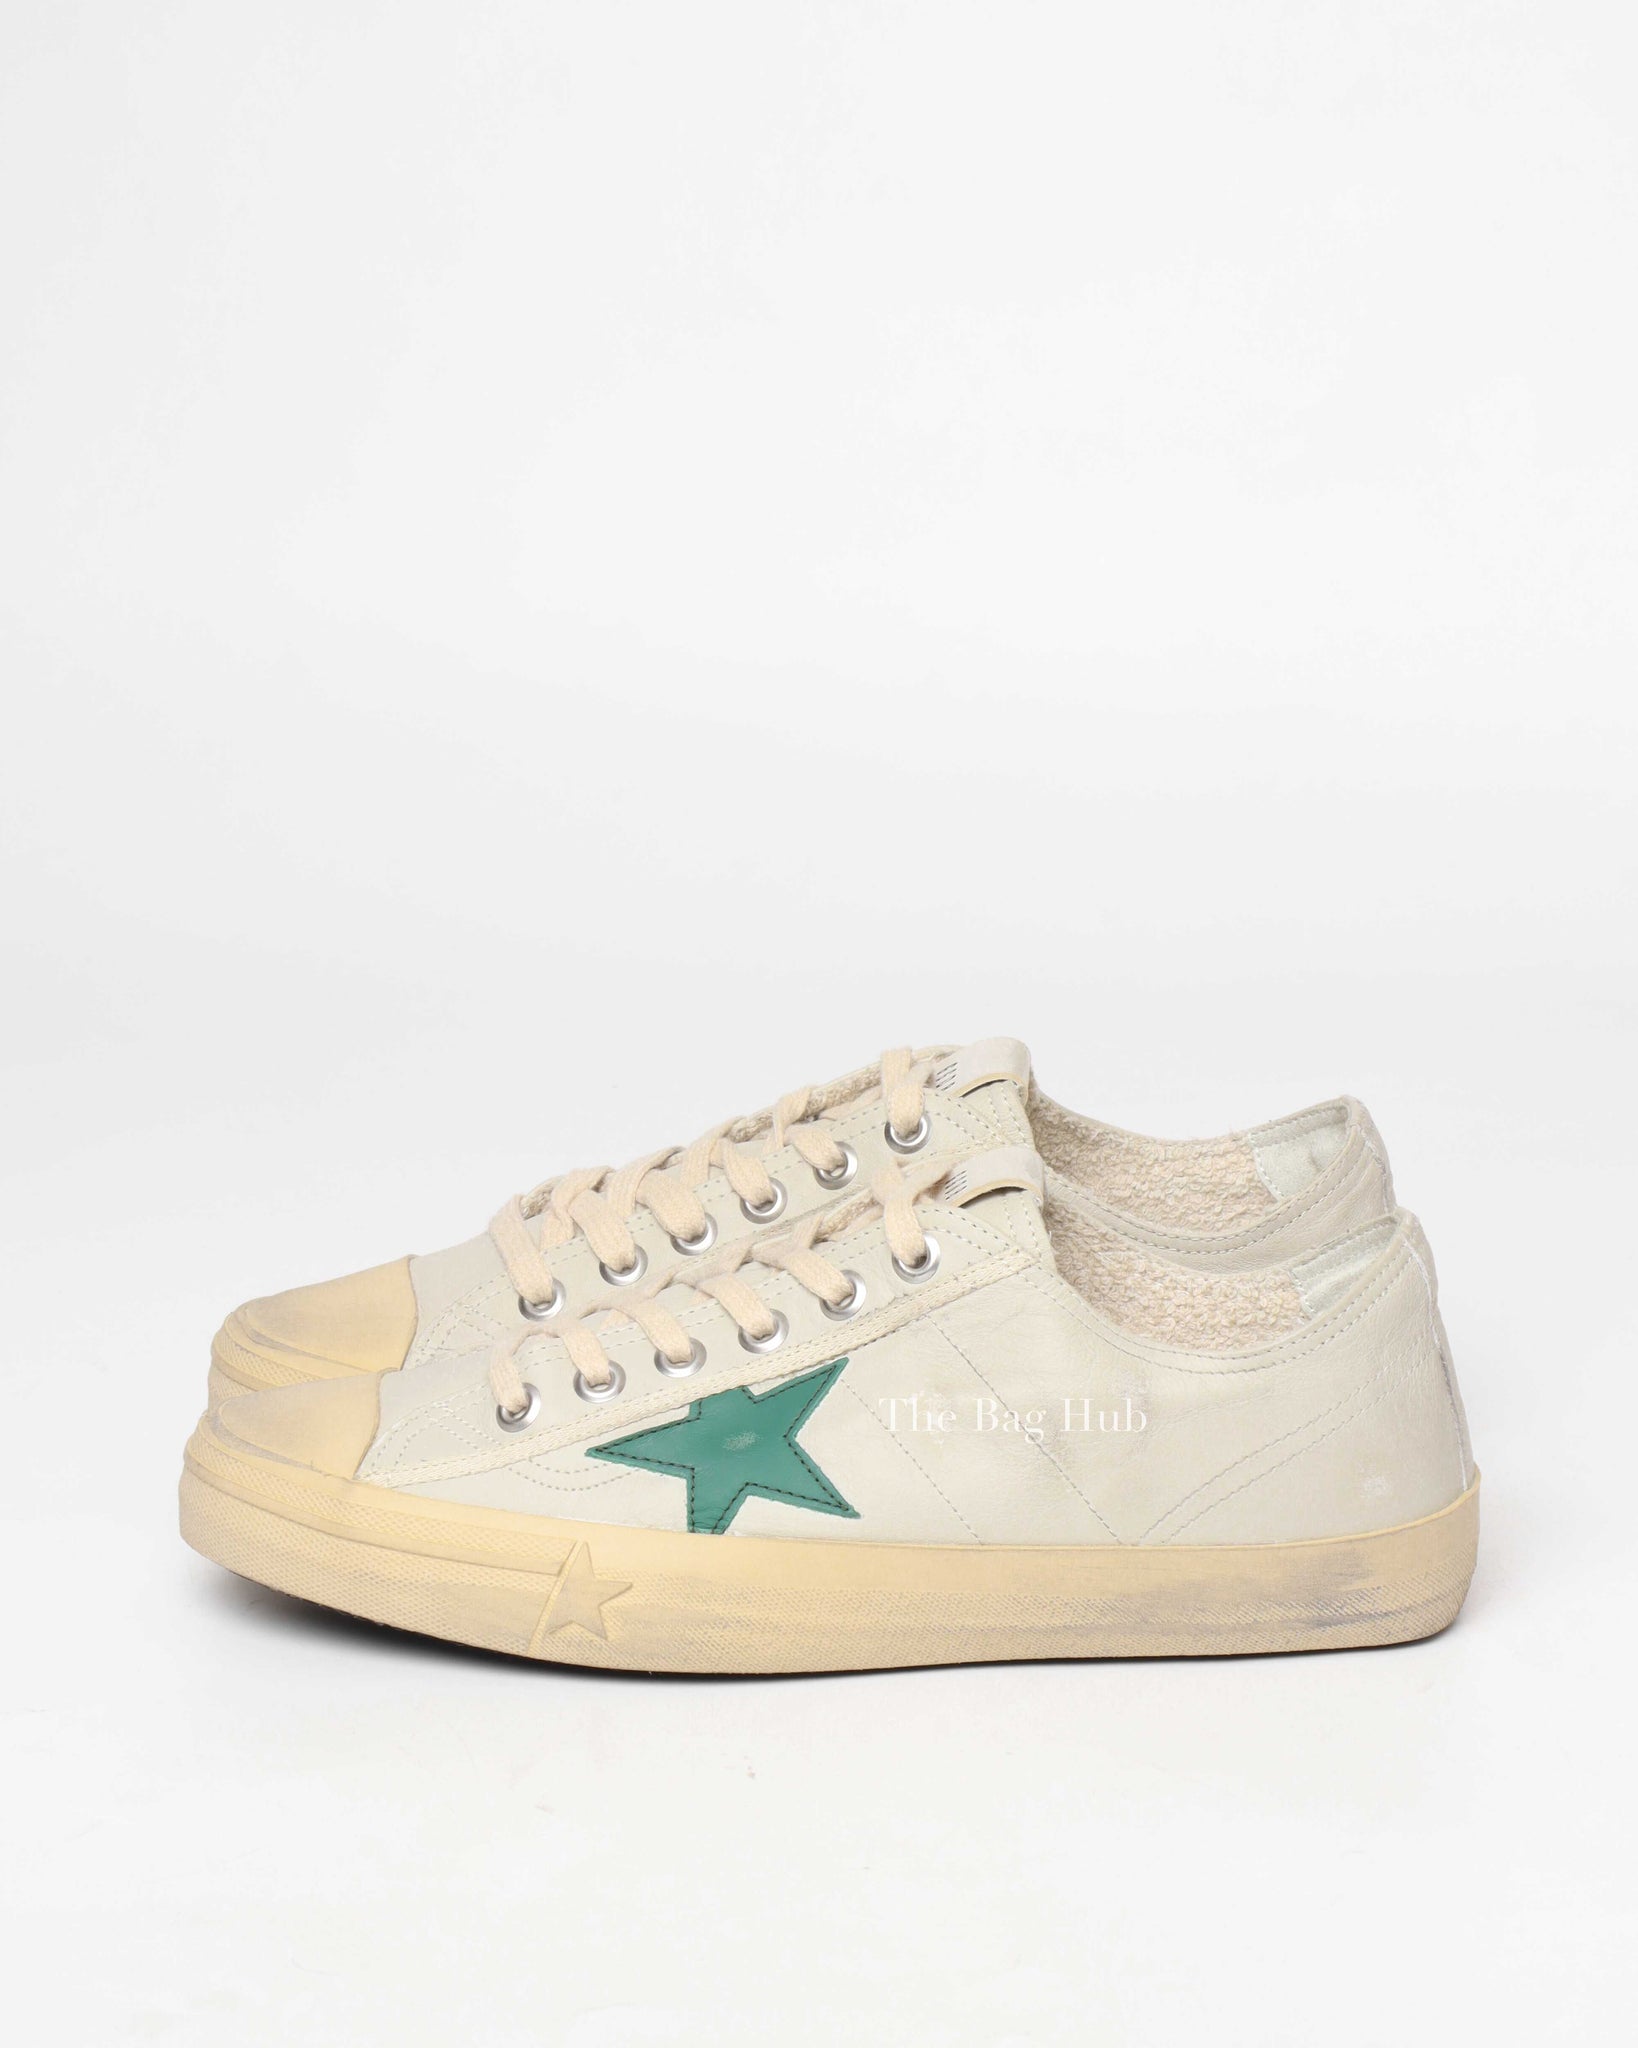 Golden Goose Offwhite w/ Green Star Leather VStar Men's Sneakers Size 43